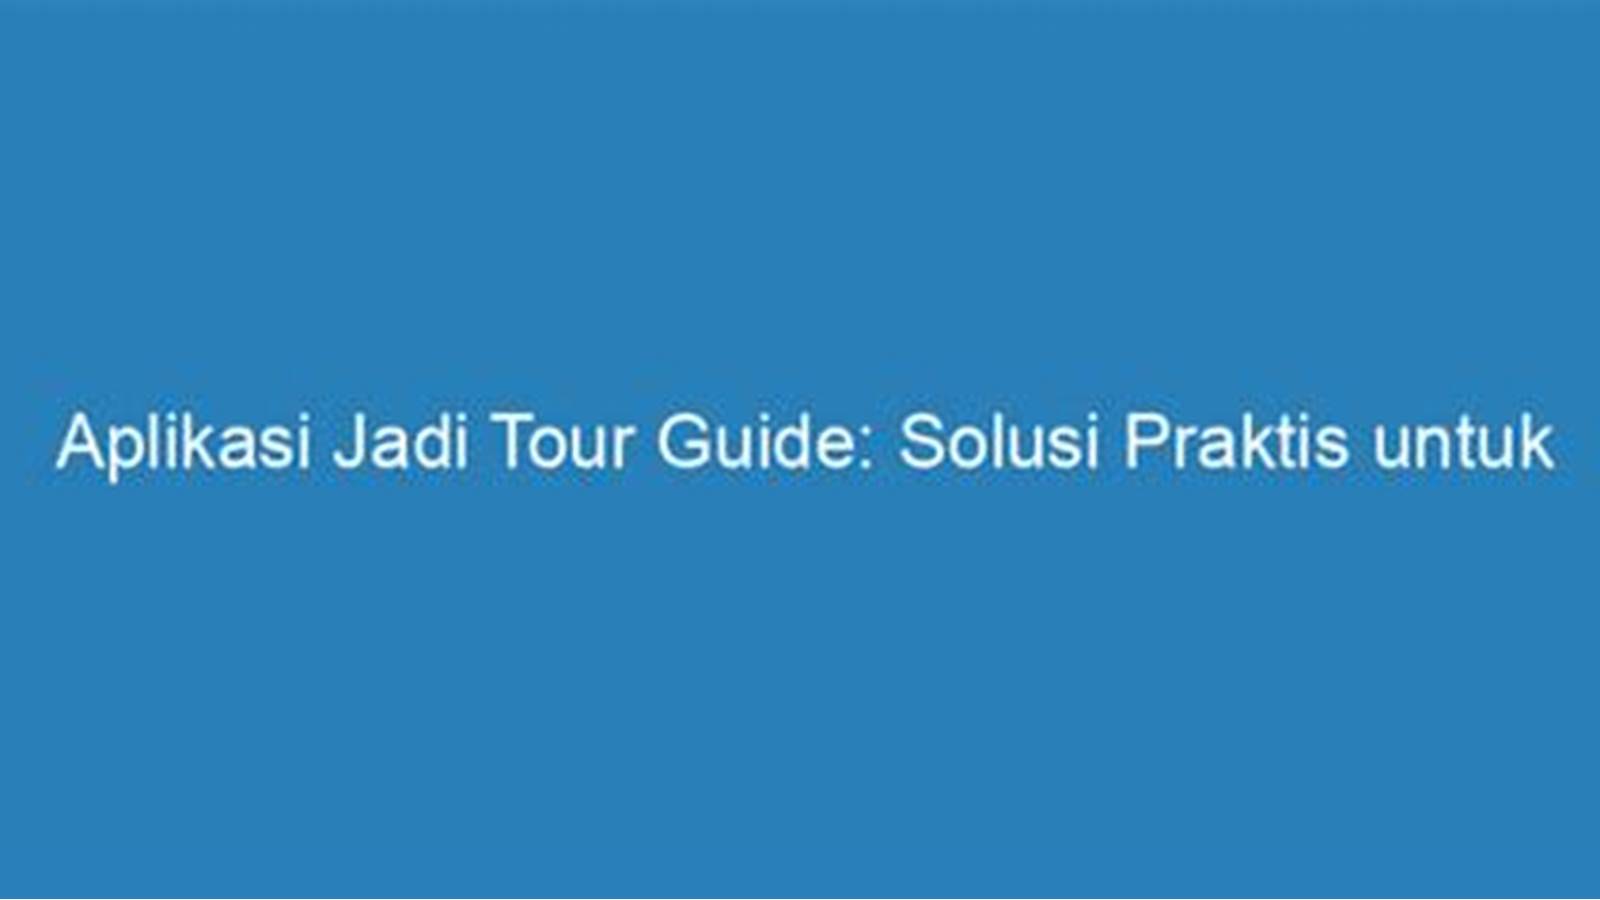 Aplikasi Jadi Tour Guide Indonesia